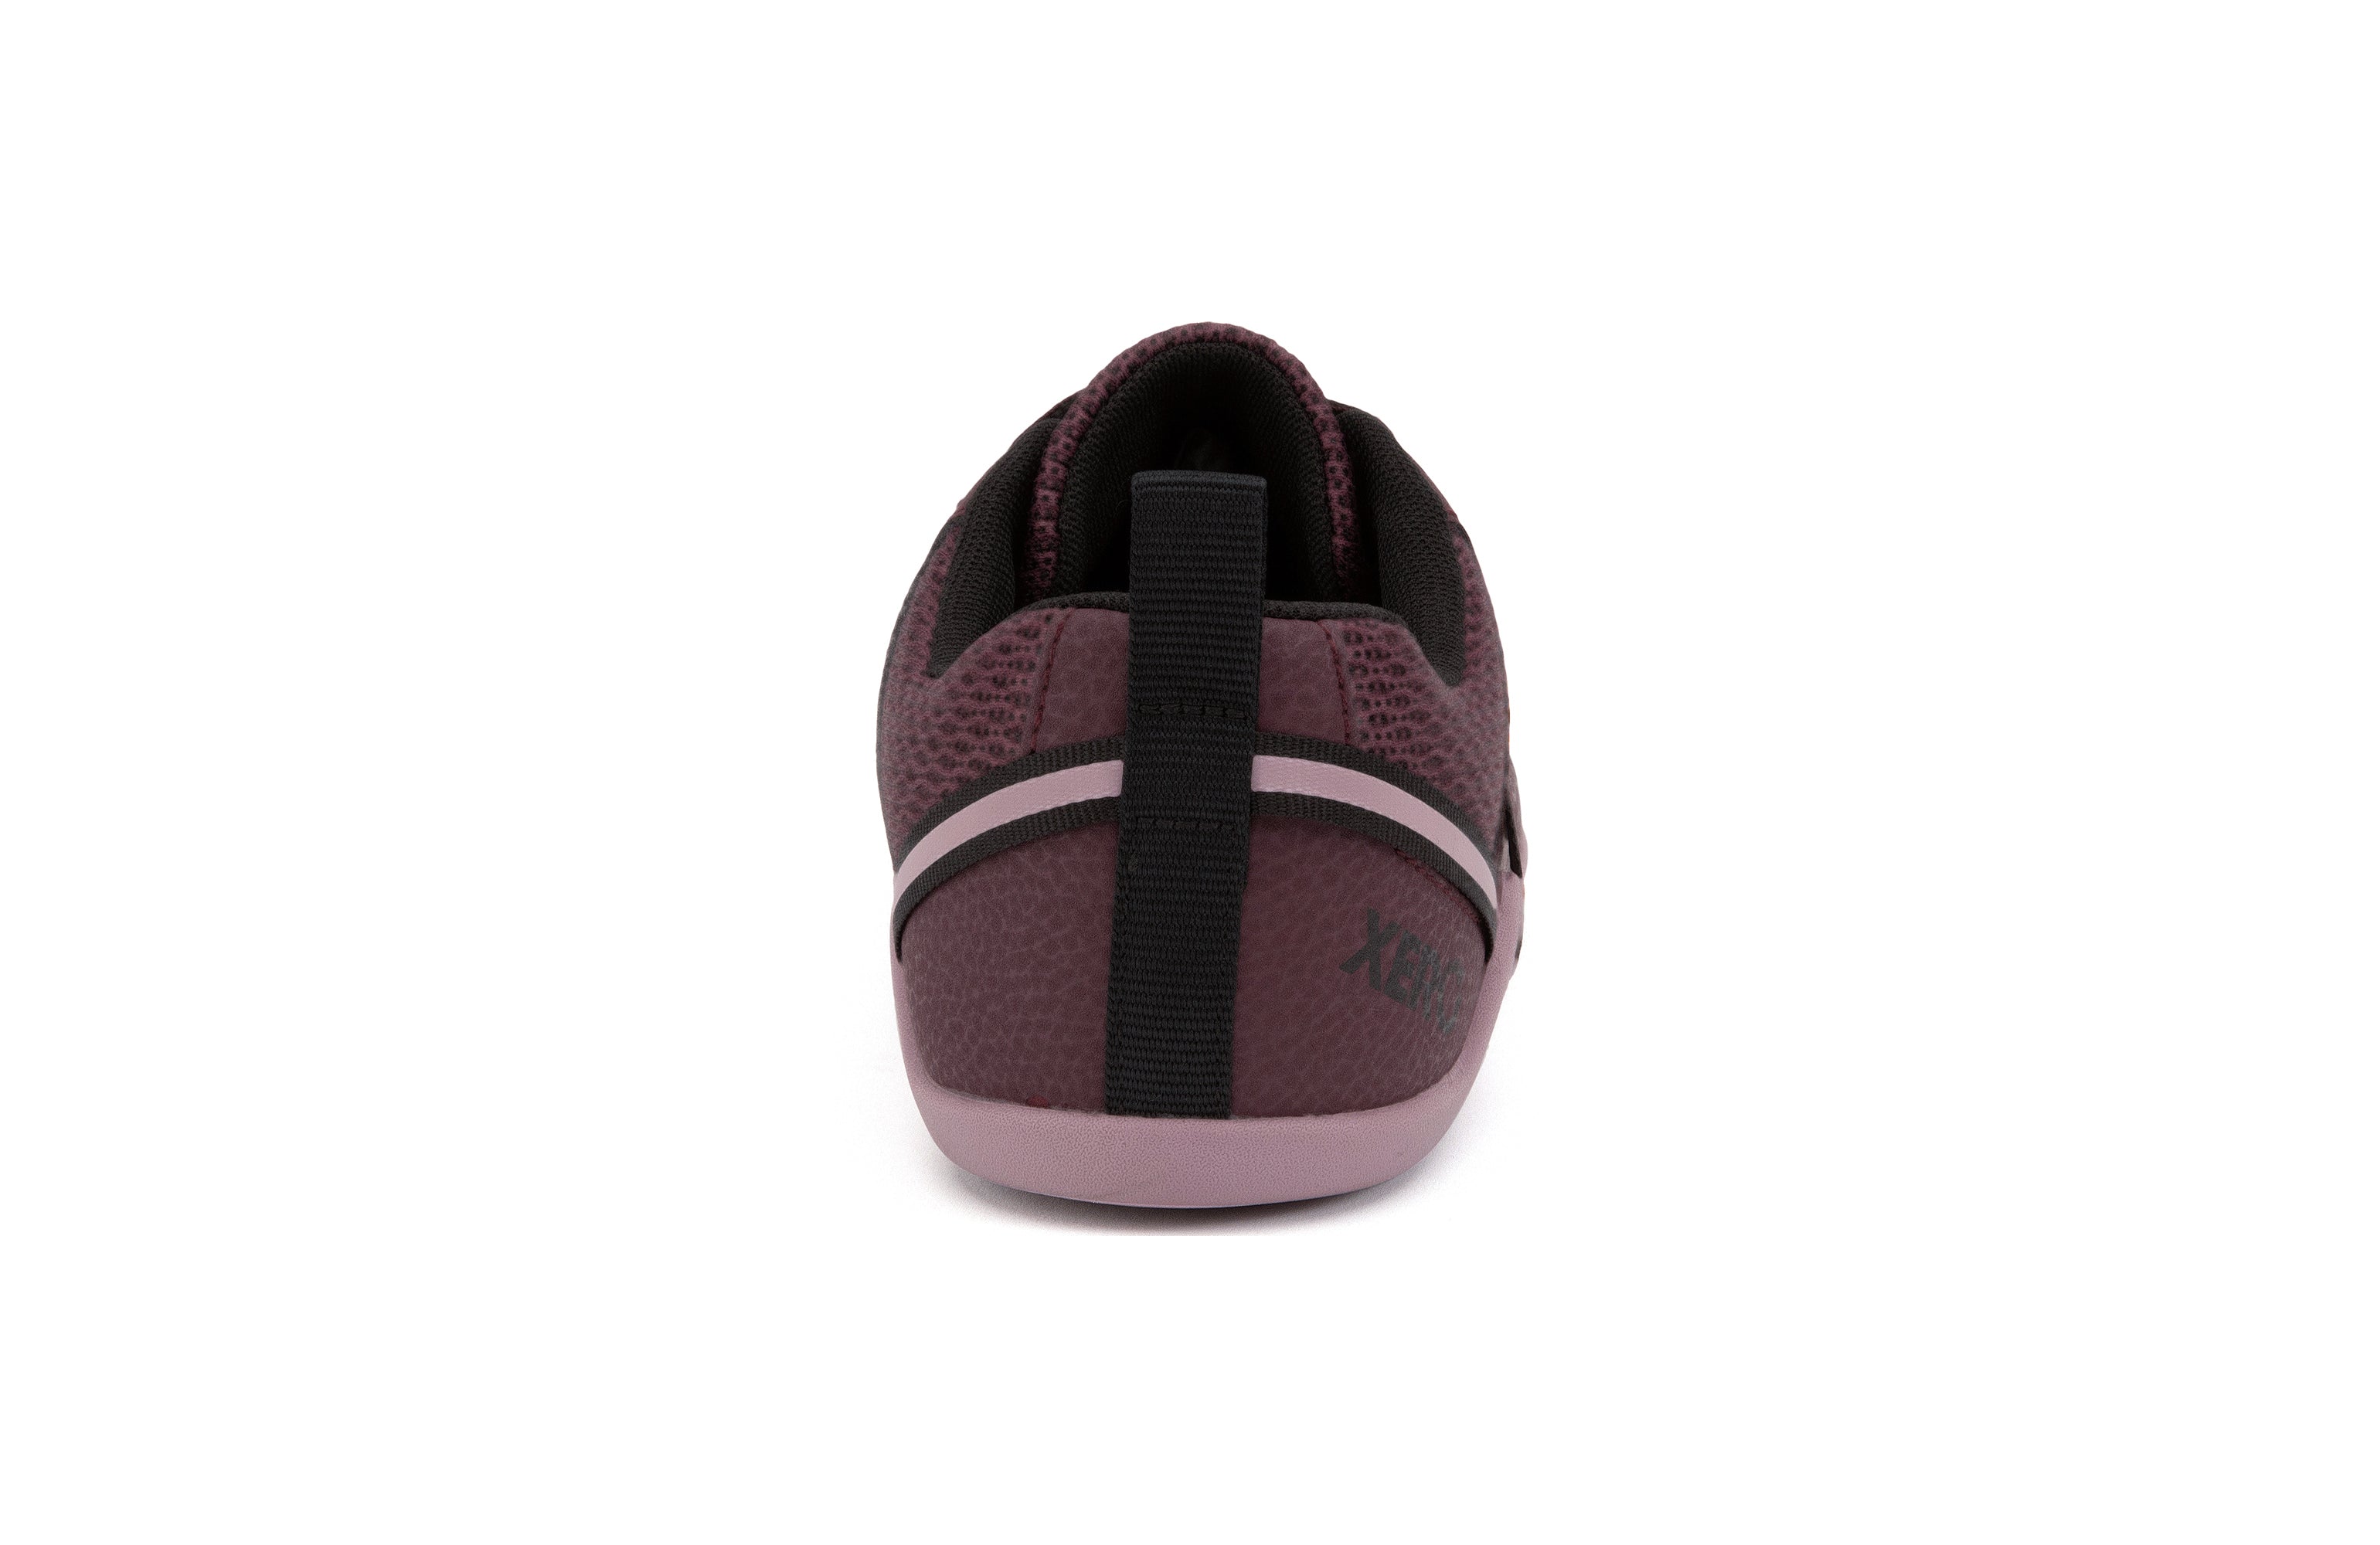 Xero Shoes Prio Womens barfods træningssko til kvinder i farven fig/elderberry, bagfra